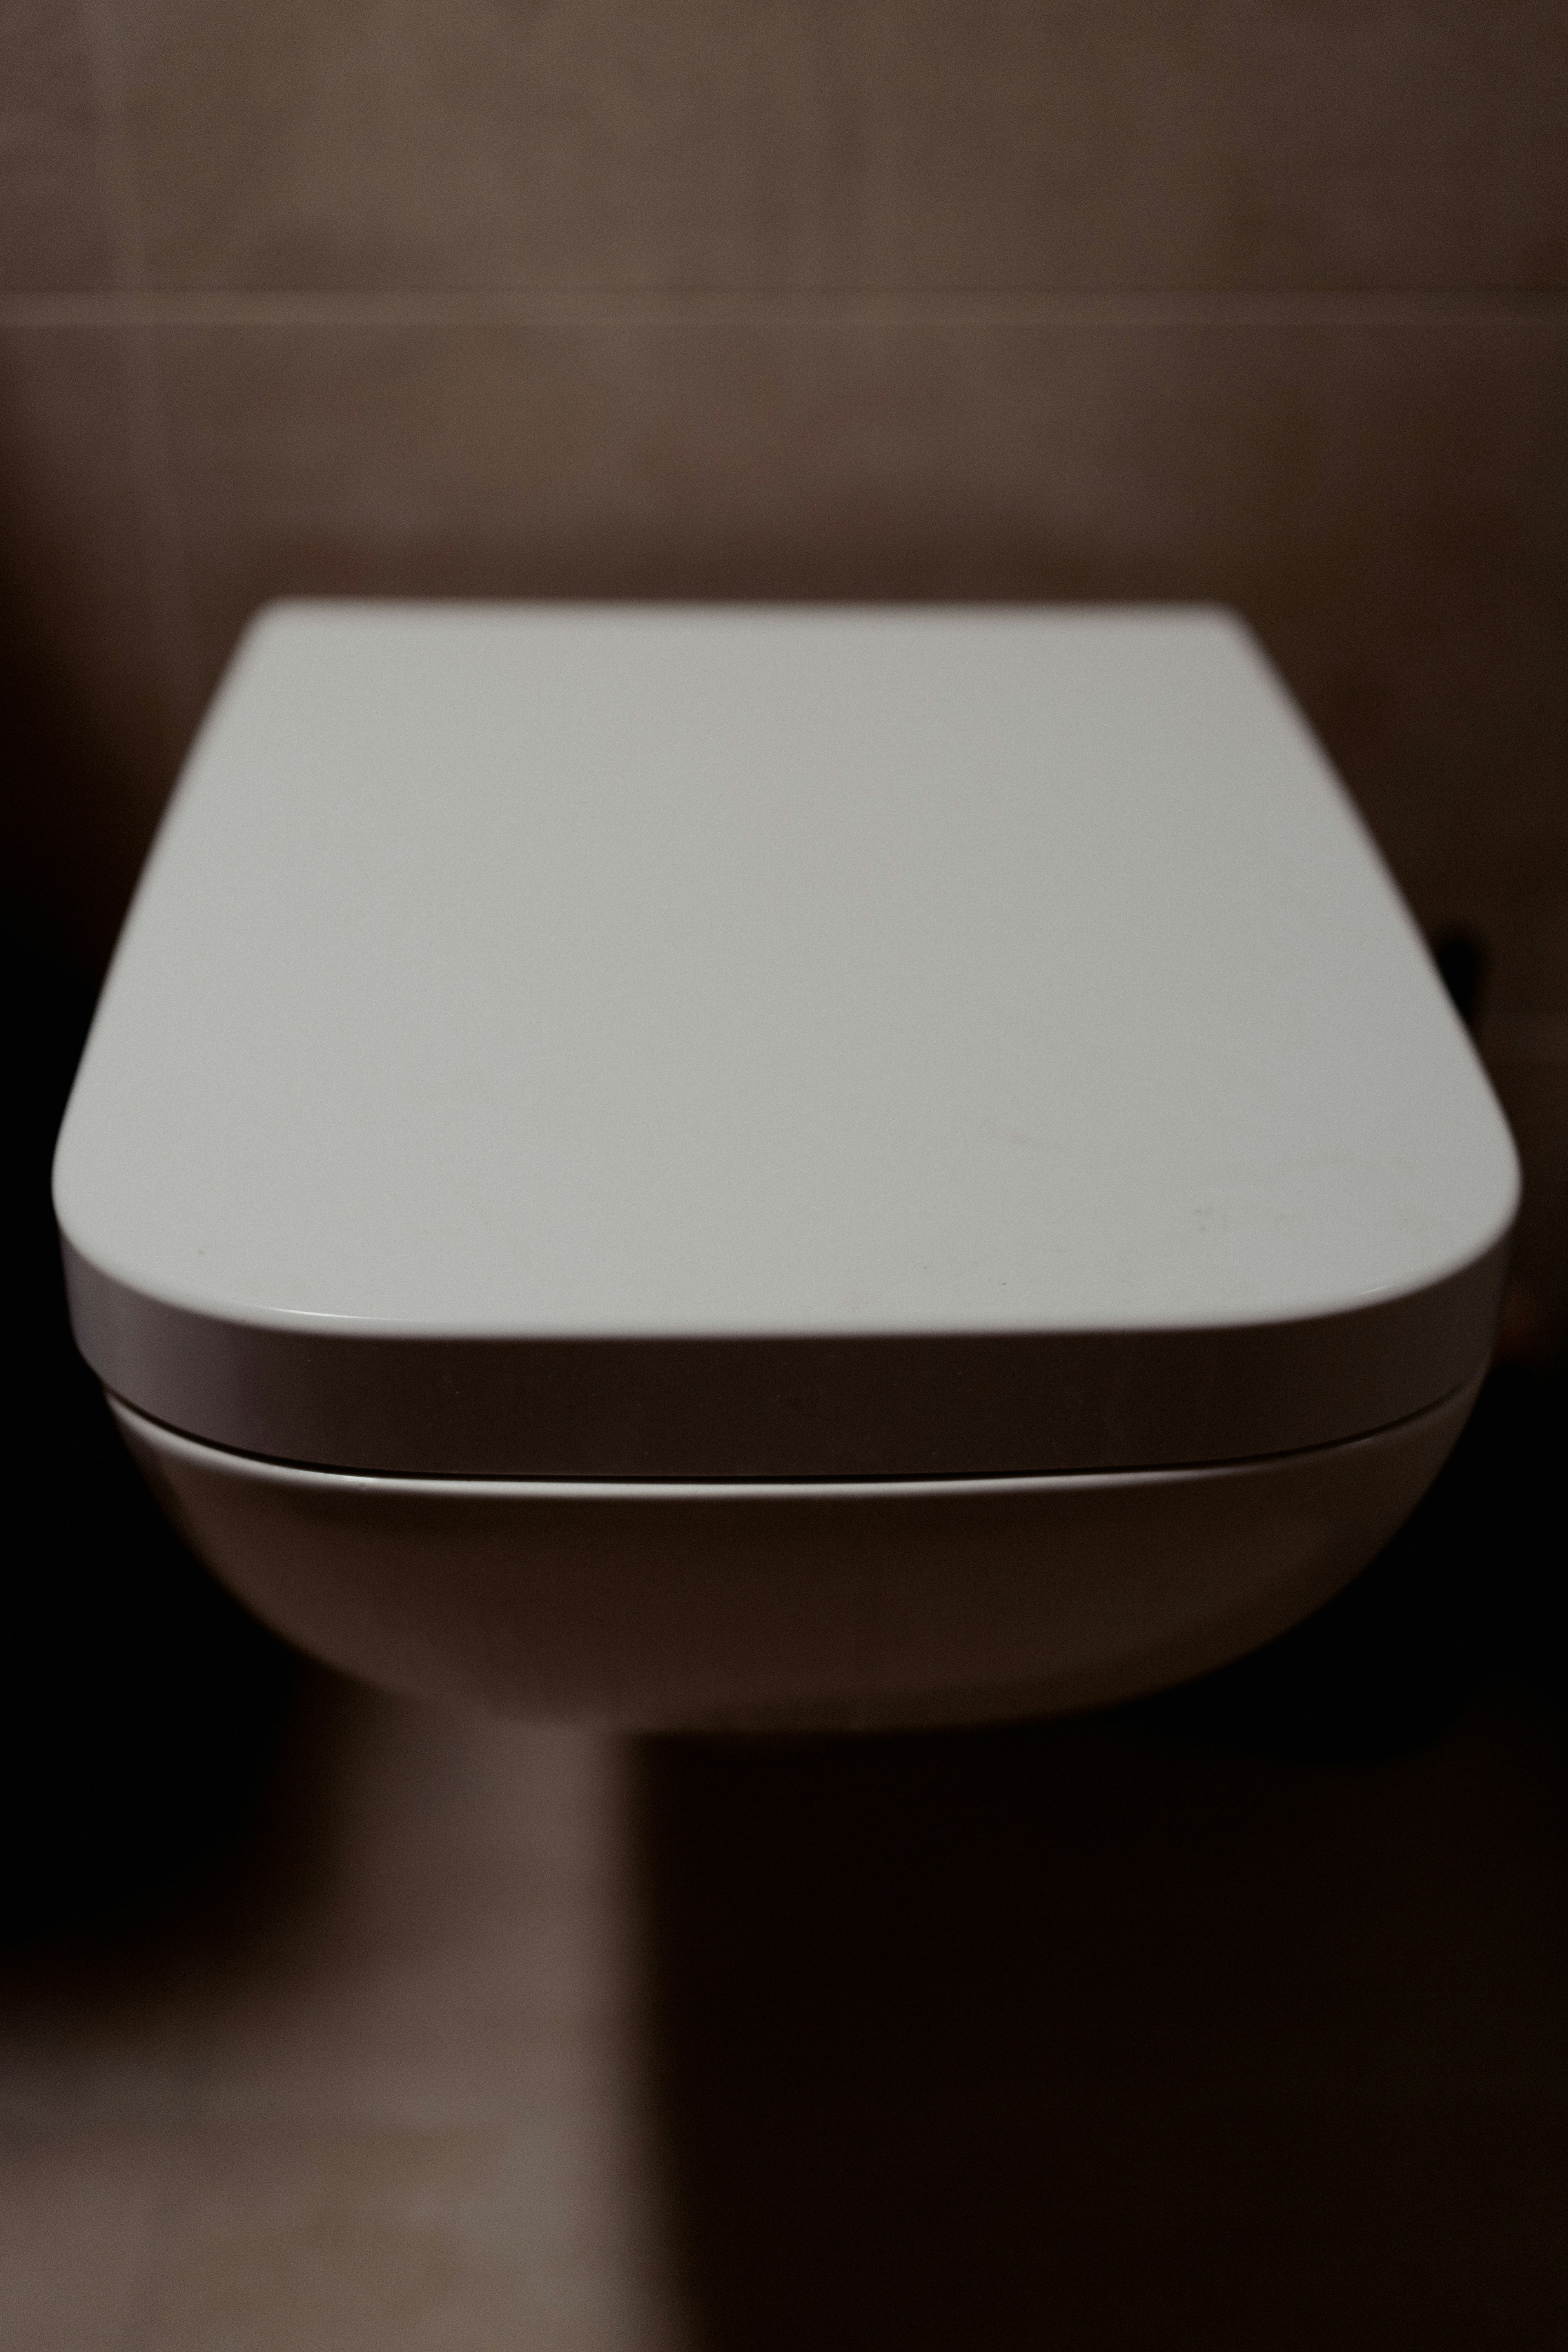 Best toilet seats for ultimate comfort